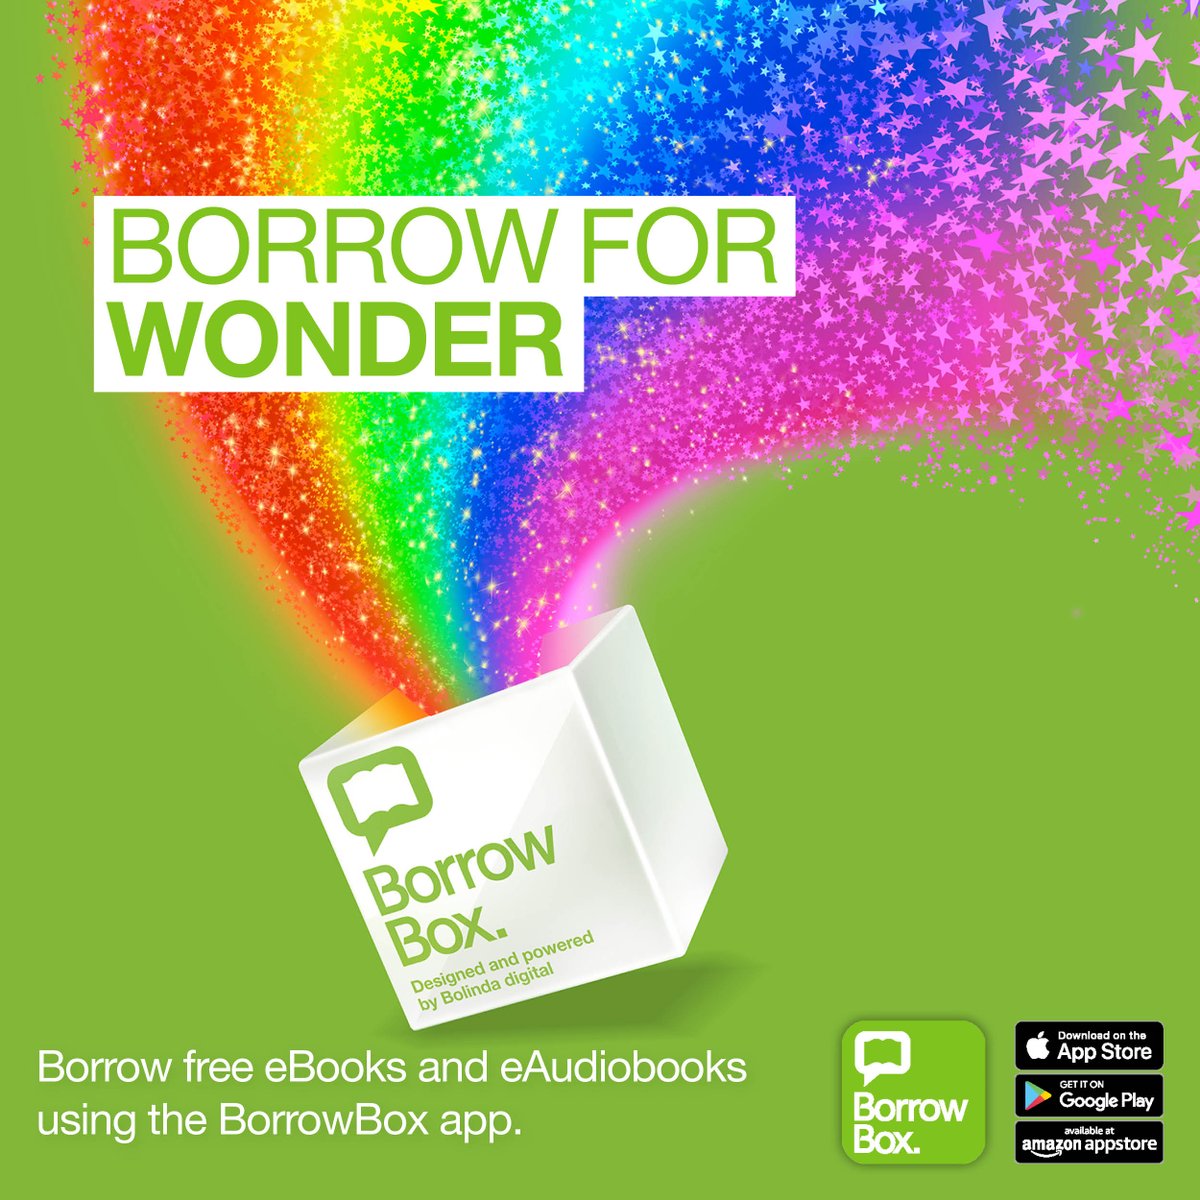 .@BorrowBox is here for wonder. Use the @Borrowbox App or visit staffordshire.gov.uk/eLibrary for a fantastic range of eBooks & eAudio